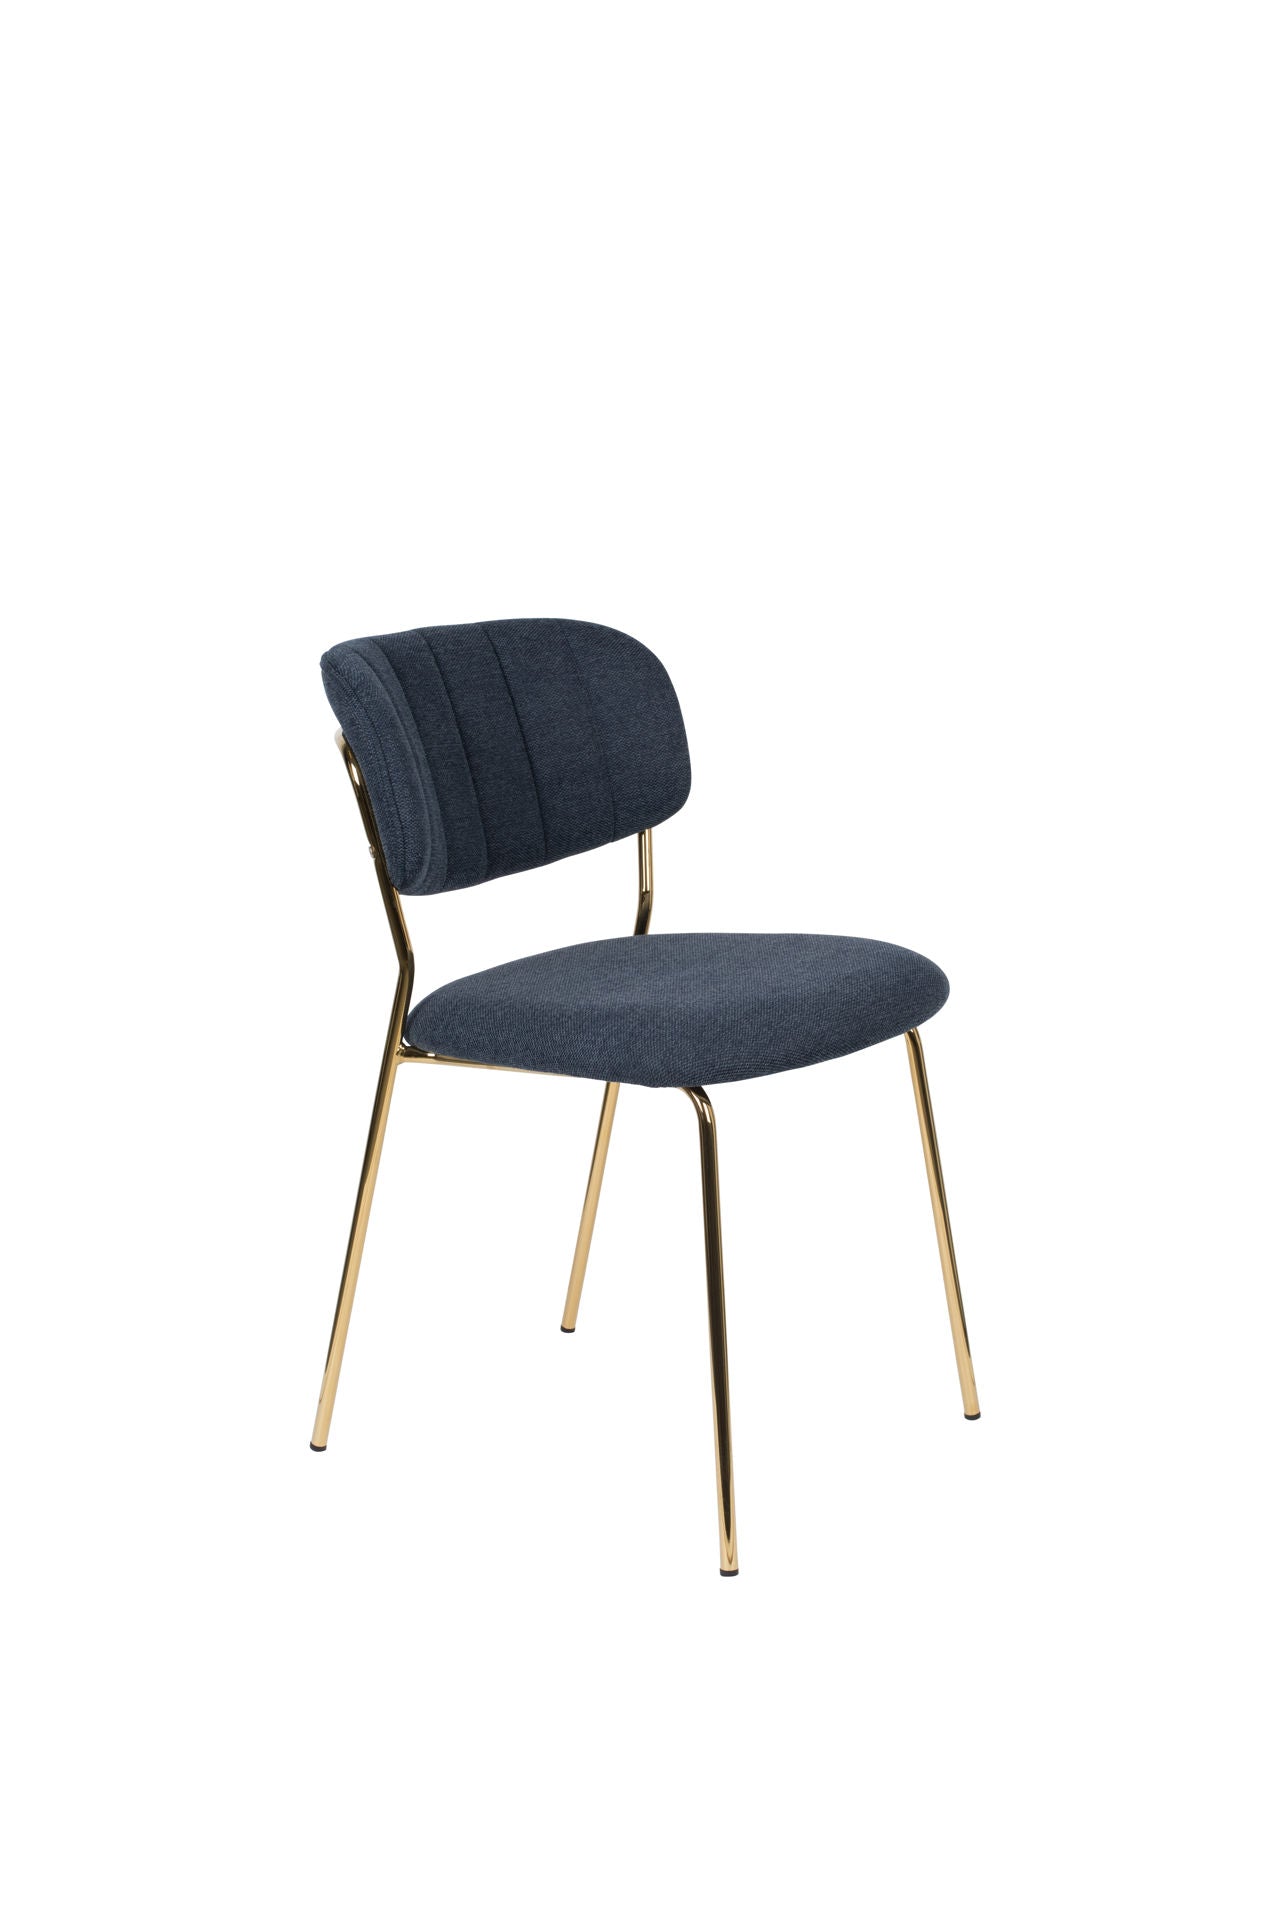 Nancy's Kings Grant Chair - Retro - Gold, Blue - Polyester, Steel, Plywood - 56 cm x 49 cm x 78 cm